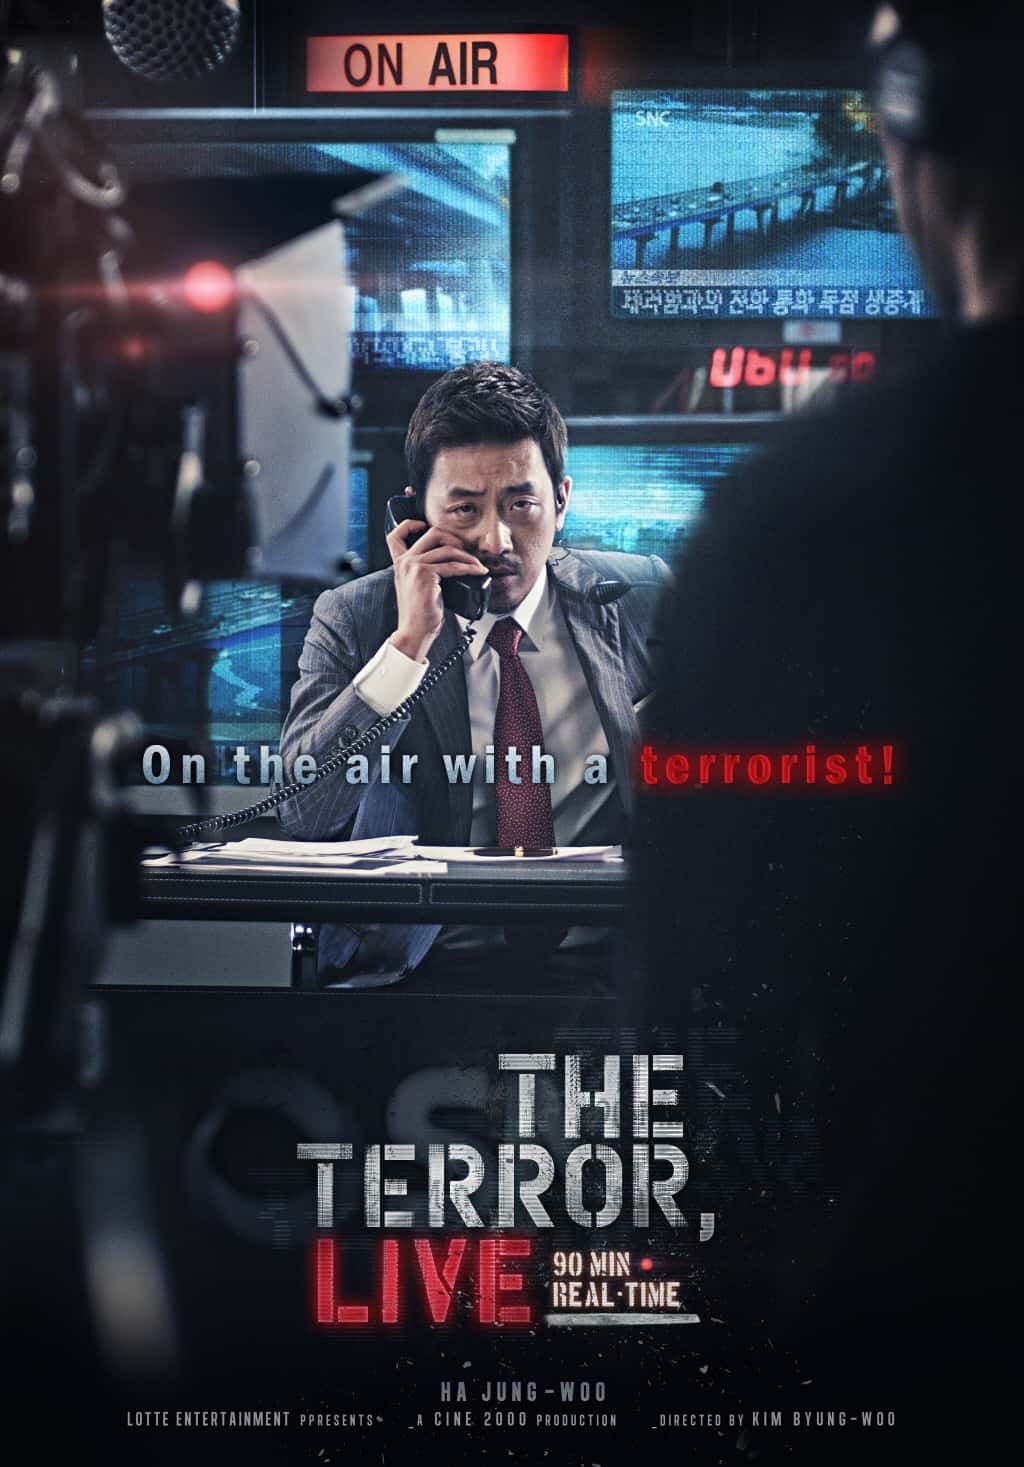 The Terror Live (Deu tae-ro ra-i-beu) (2013) ออนแอร์ระทึก เผด็จศึกผู้ก่อการร้าย